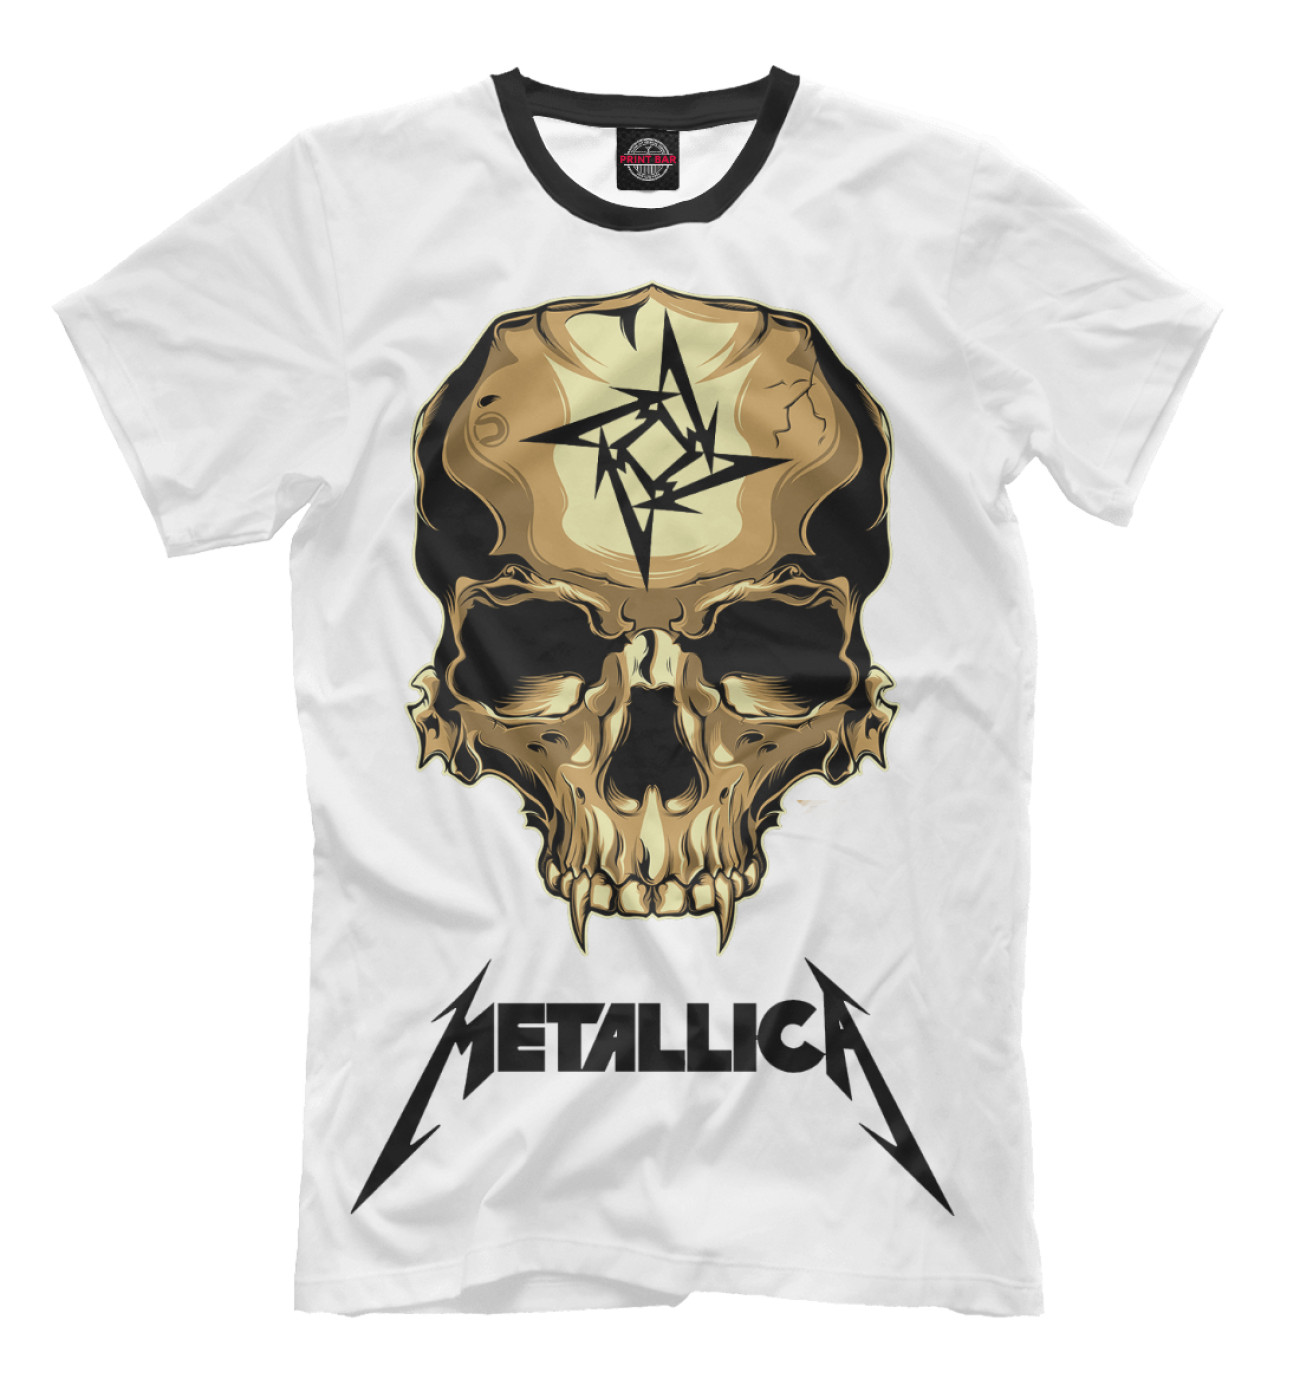 Мужская Футболка Metallica Skull, артикул: MET-291305-fut-2